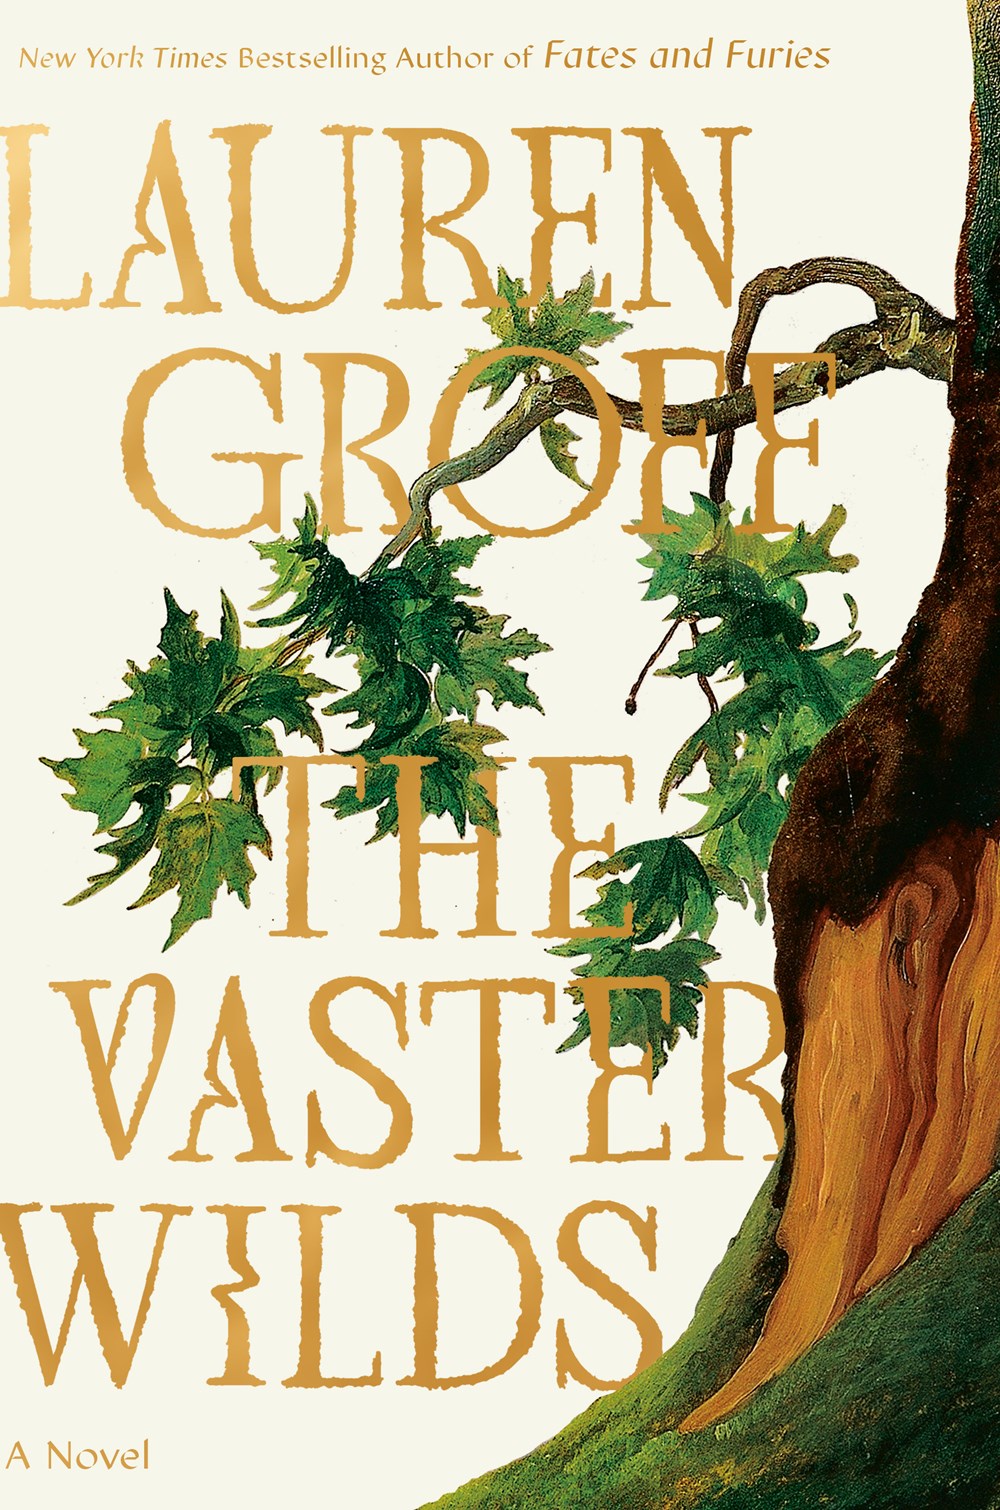 (PDF) The Vaster Wilds By _ (Lauren Groff).pdf